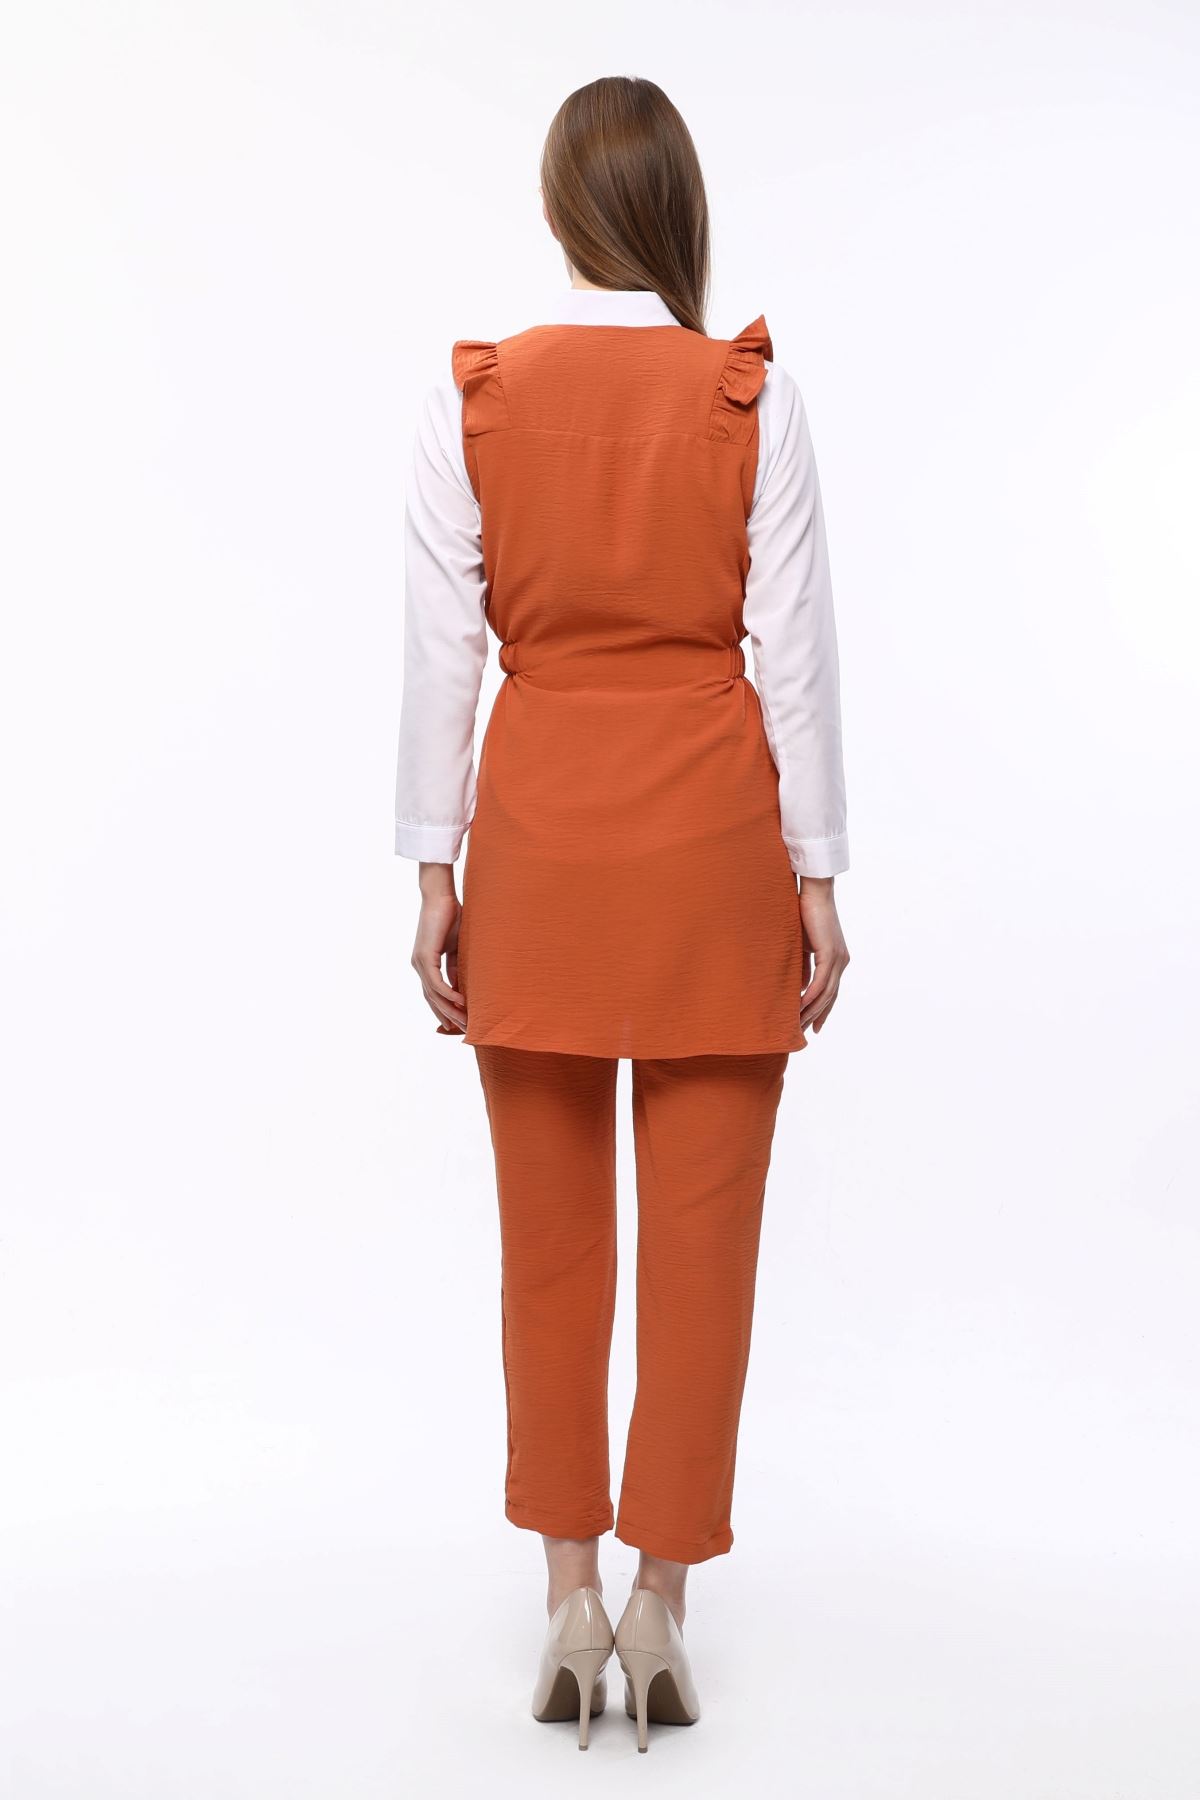 Triple Ayrobin Orange Women's Tunic Set